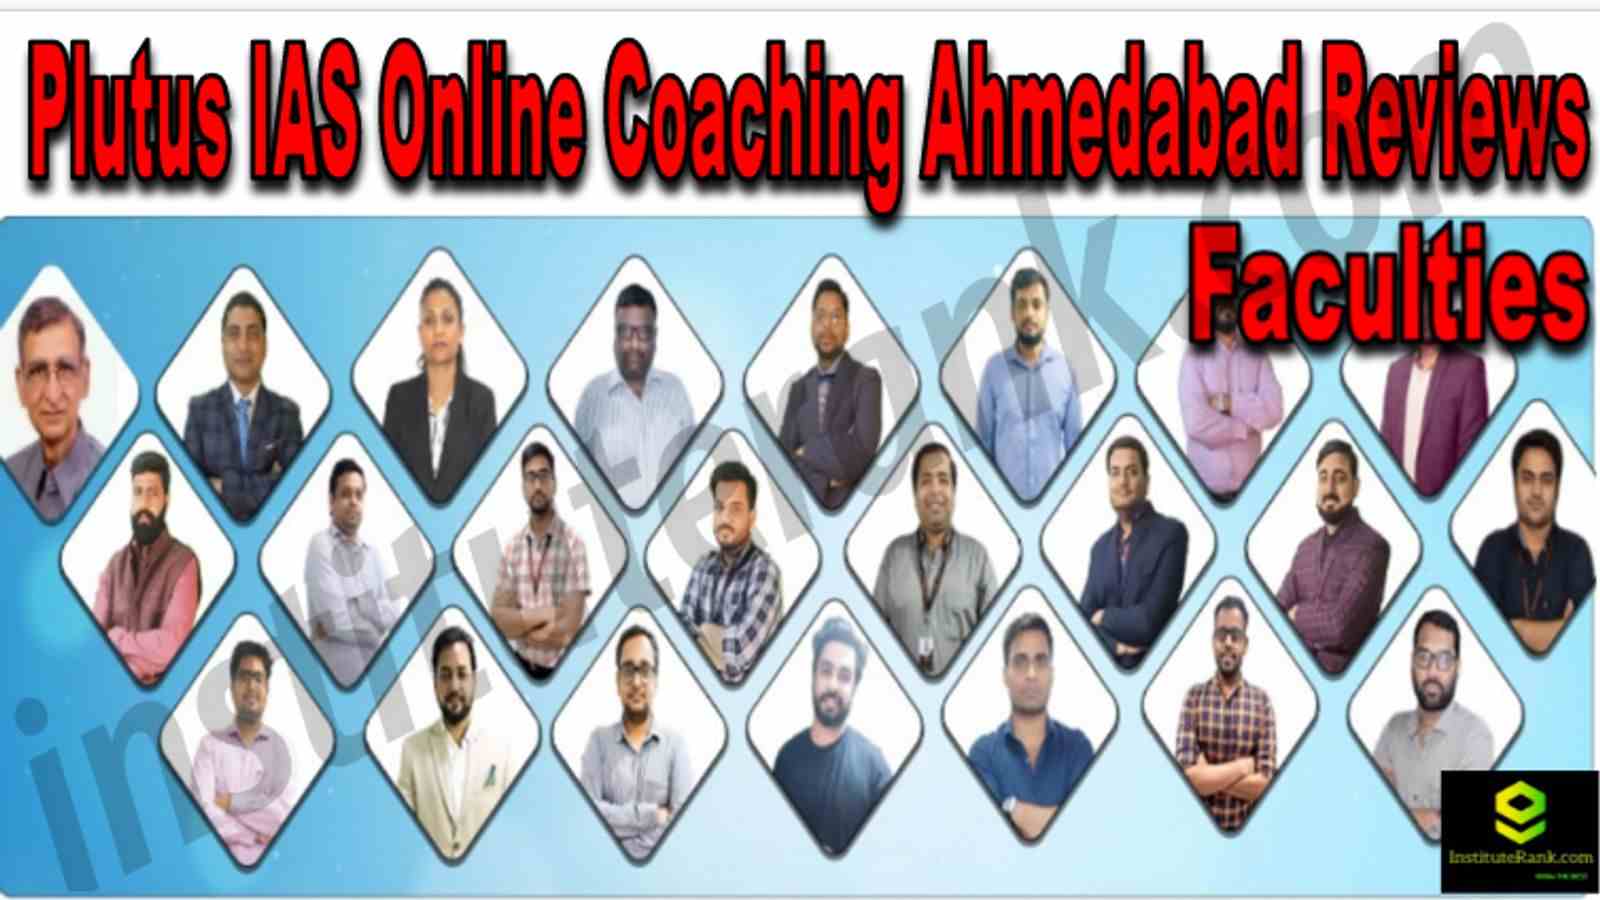 Plutus IAS Online Coaching Ahmedabad Reviews Faculties